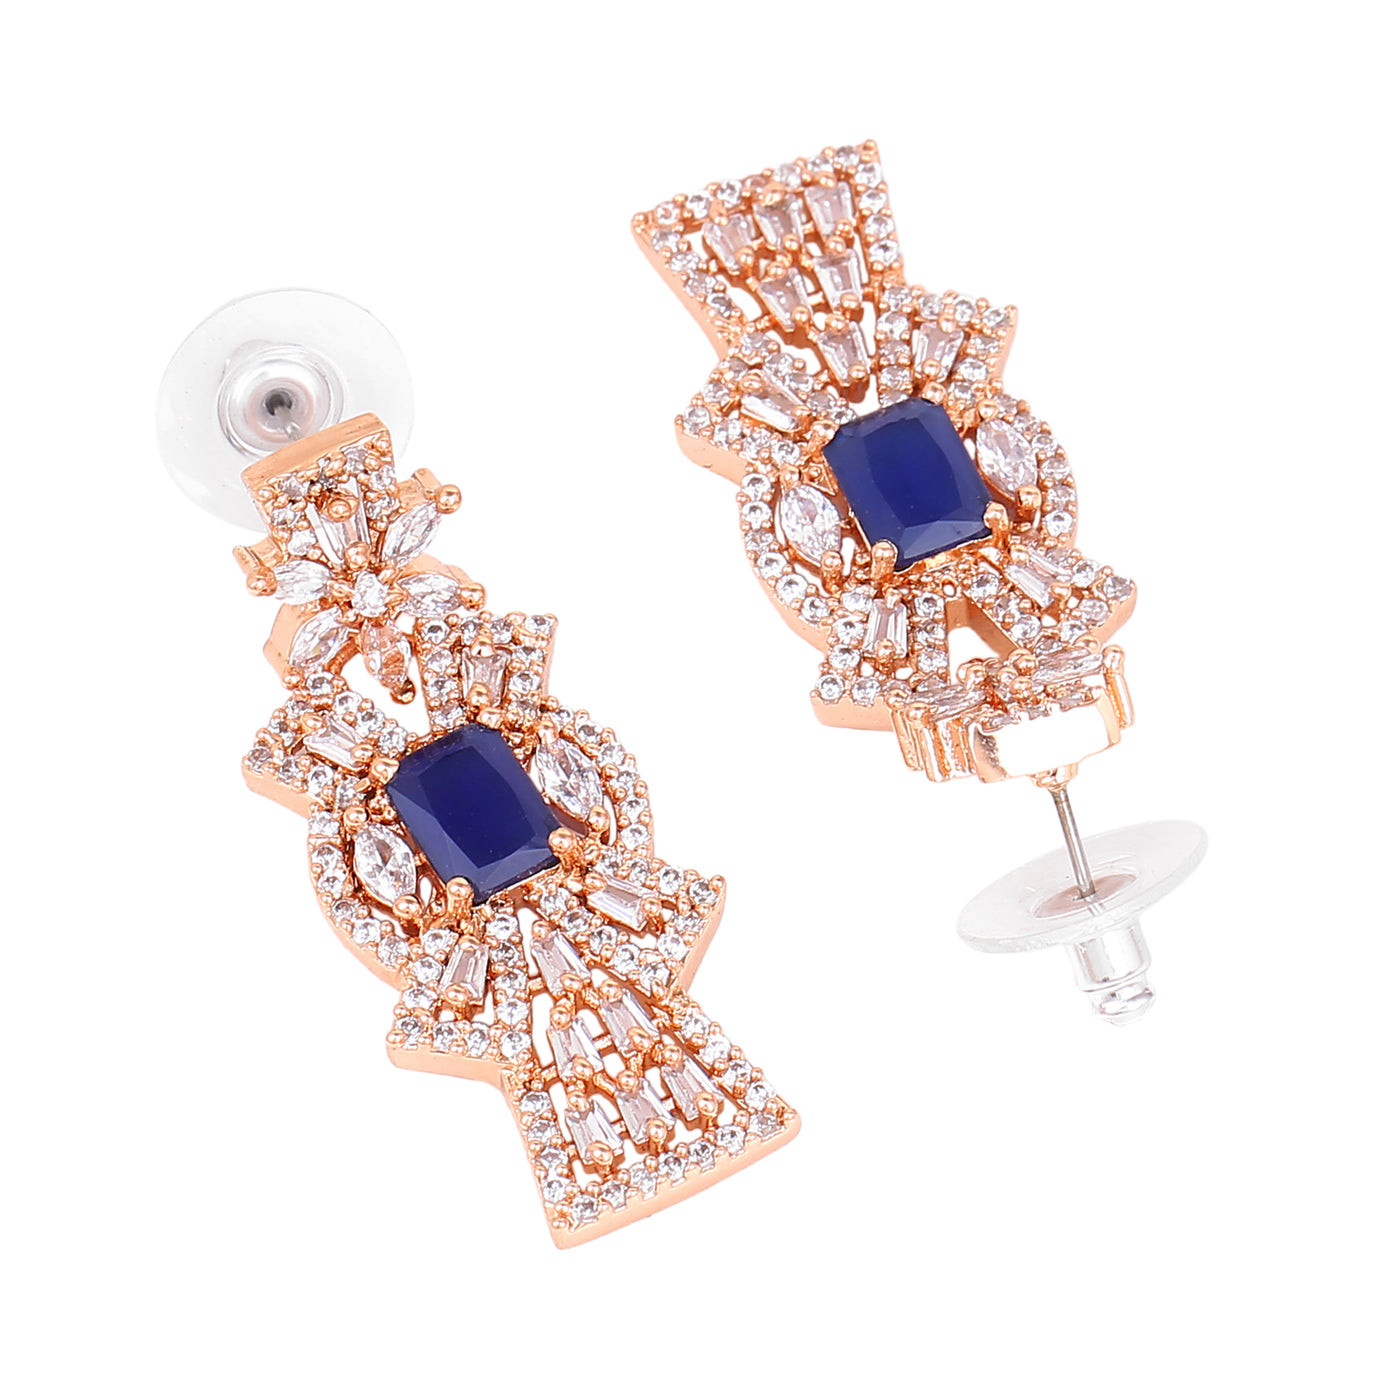 Estele Rose Gold Plated CZ Ravishing Earrings with Blue Stones for Women